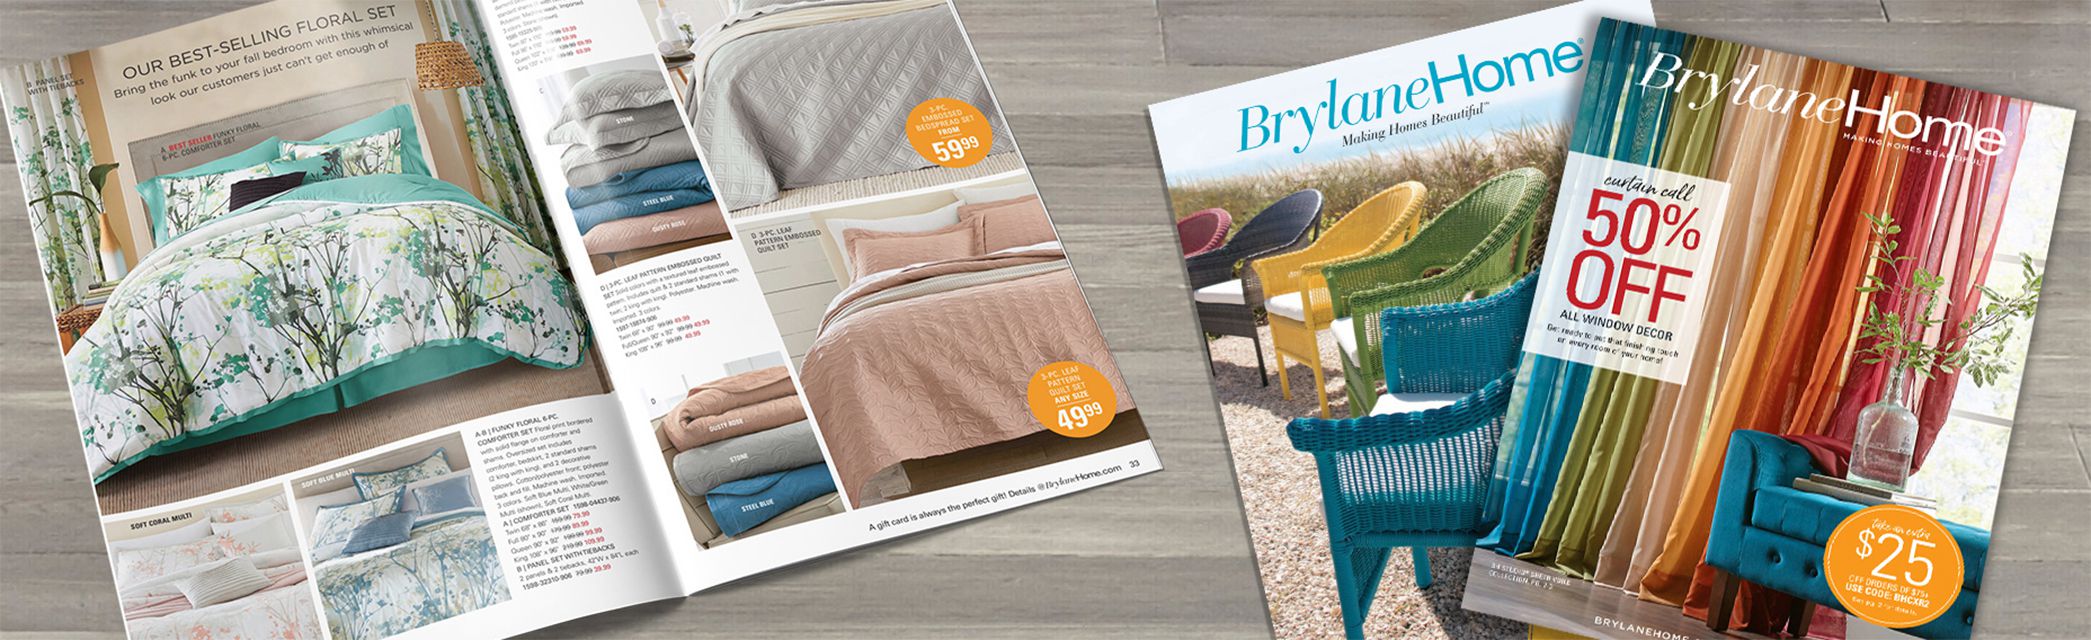 Brylane Home Catalogue